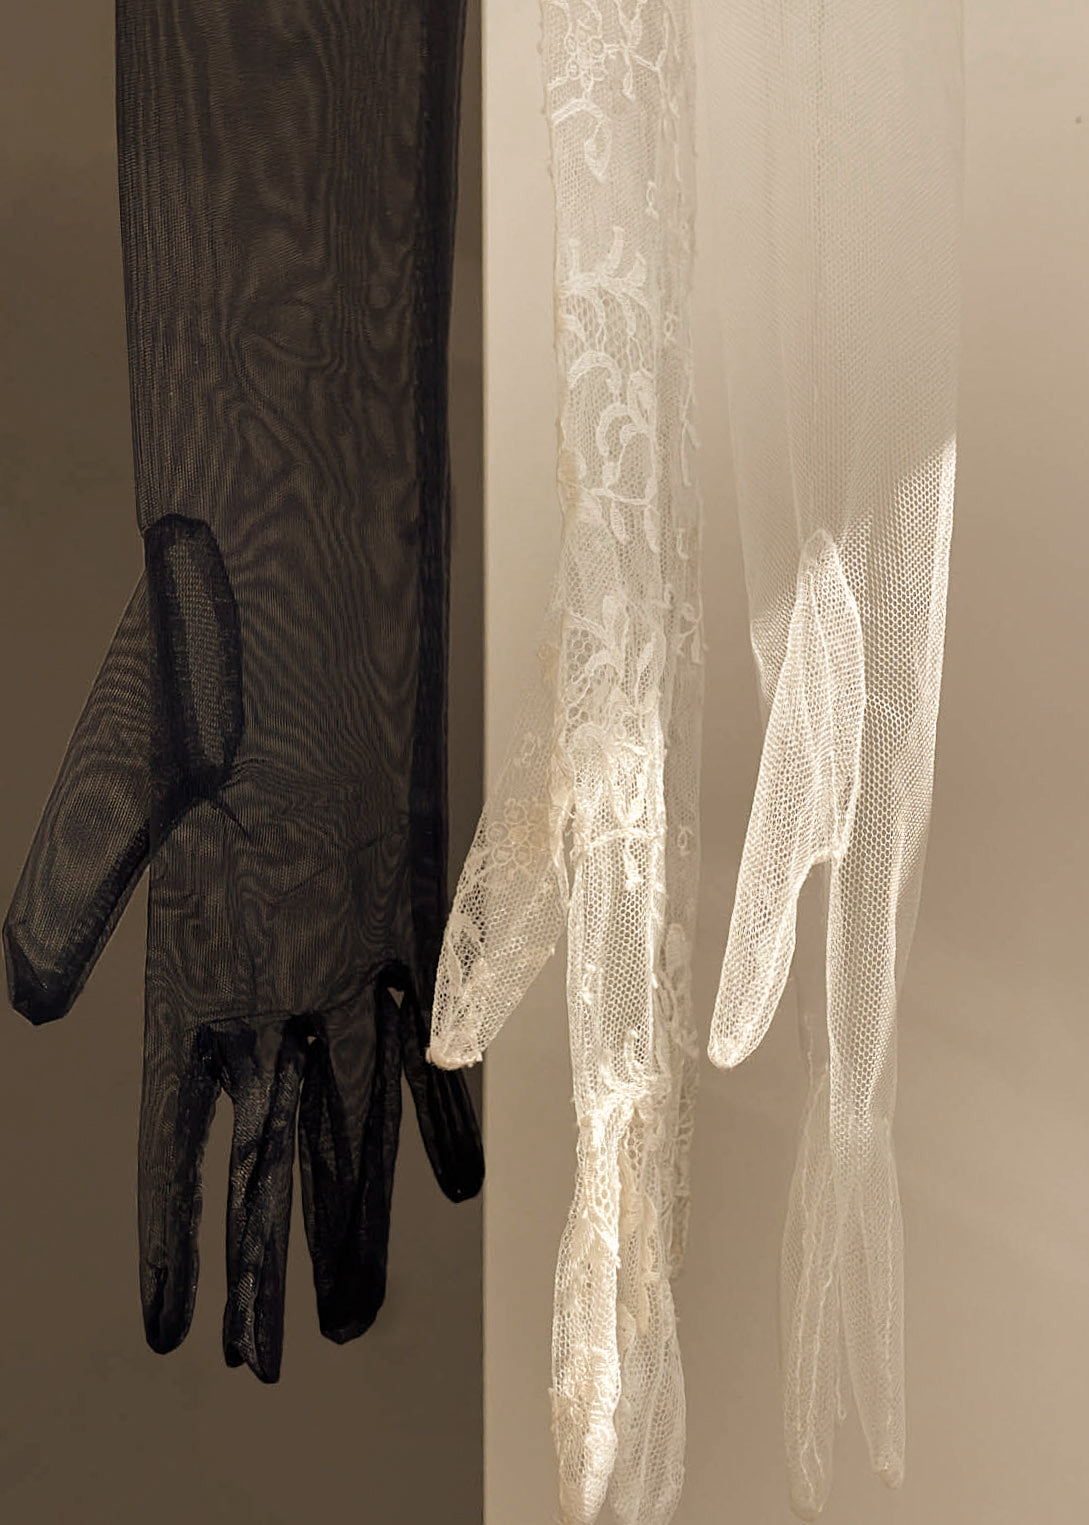 black tulle opera gloves bride accessories for wedding day wedding accessories shop